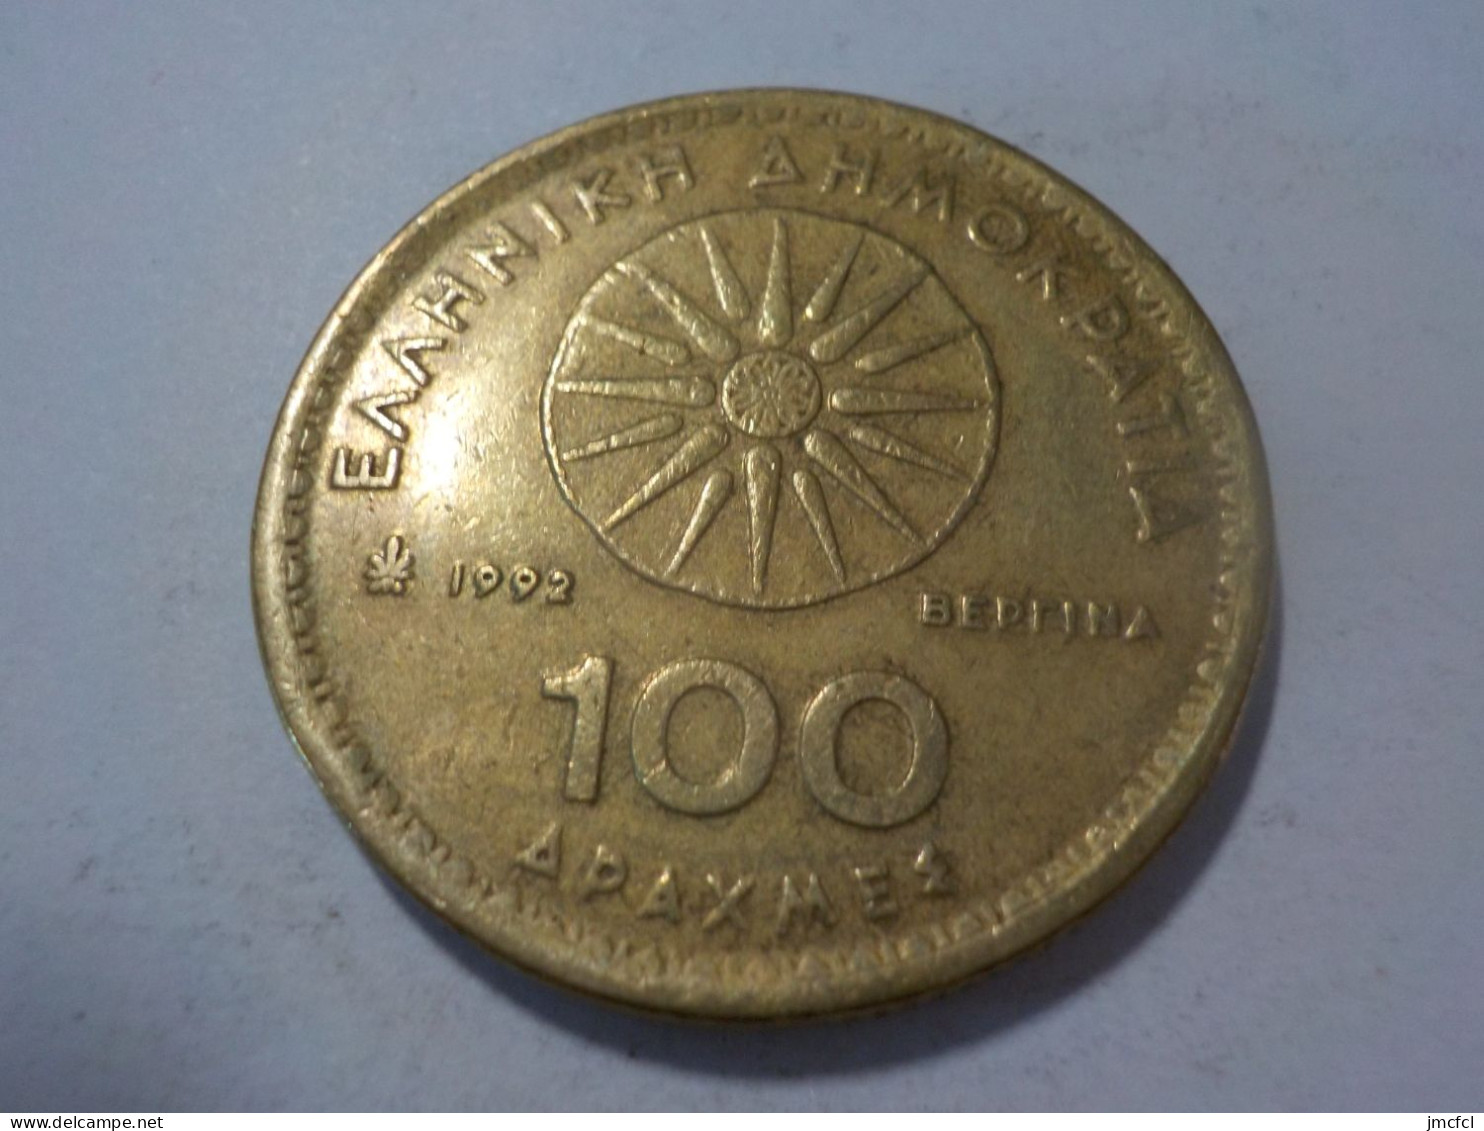 GRECE 100 Apaxmes 1992 - Grèce